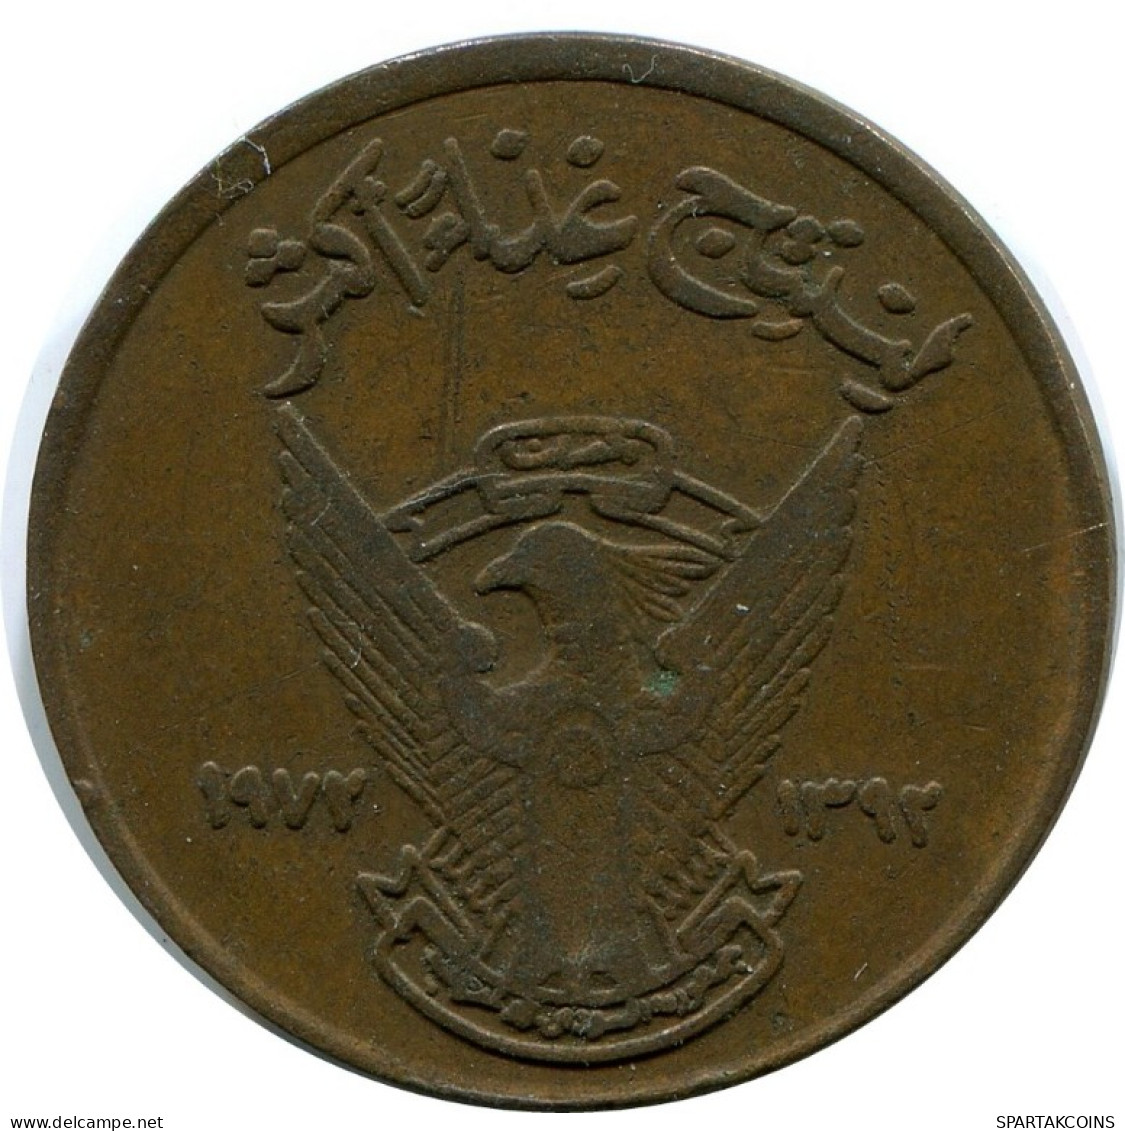 5 MILLIEMES 1392 (1972) SUDAN FAO Coin #AK244.U.A - Soudan